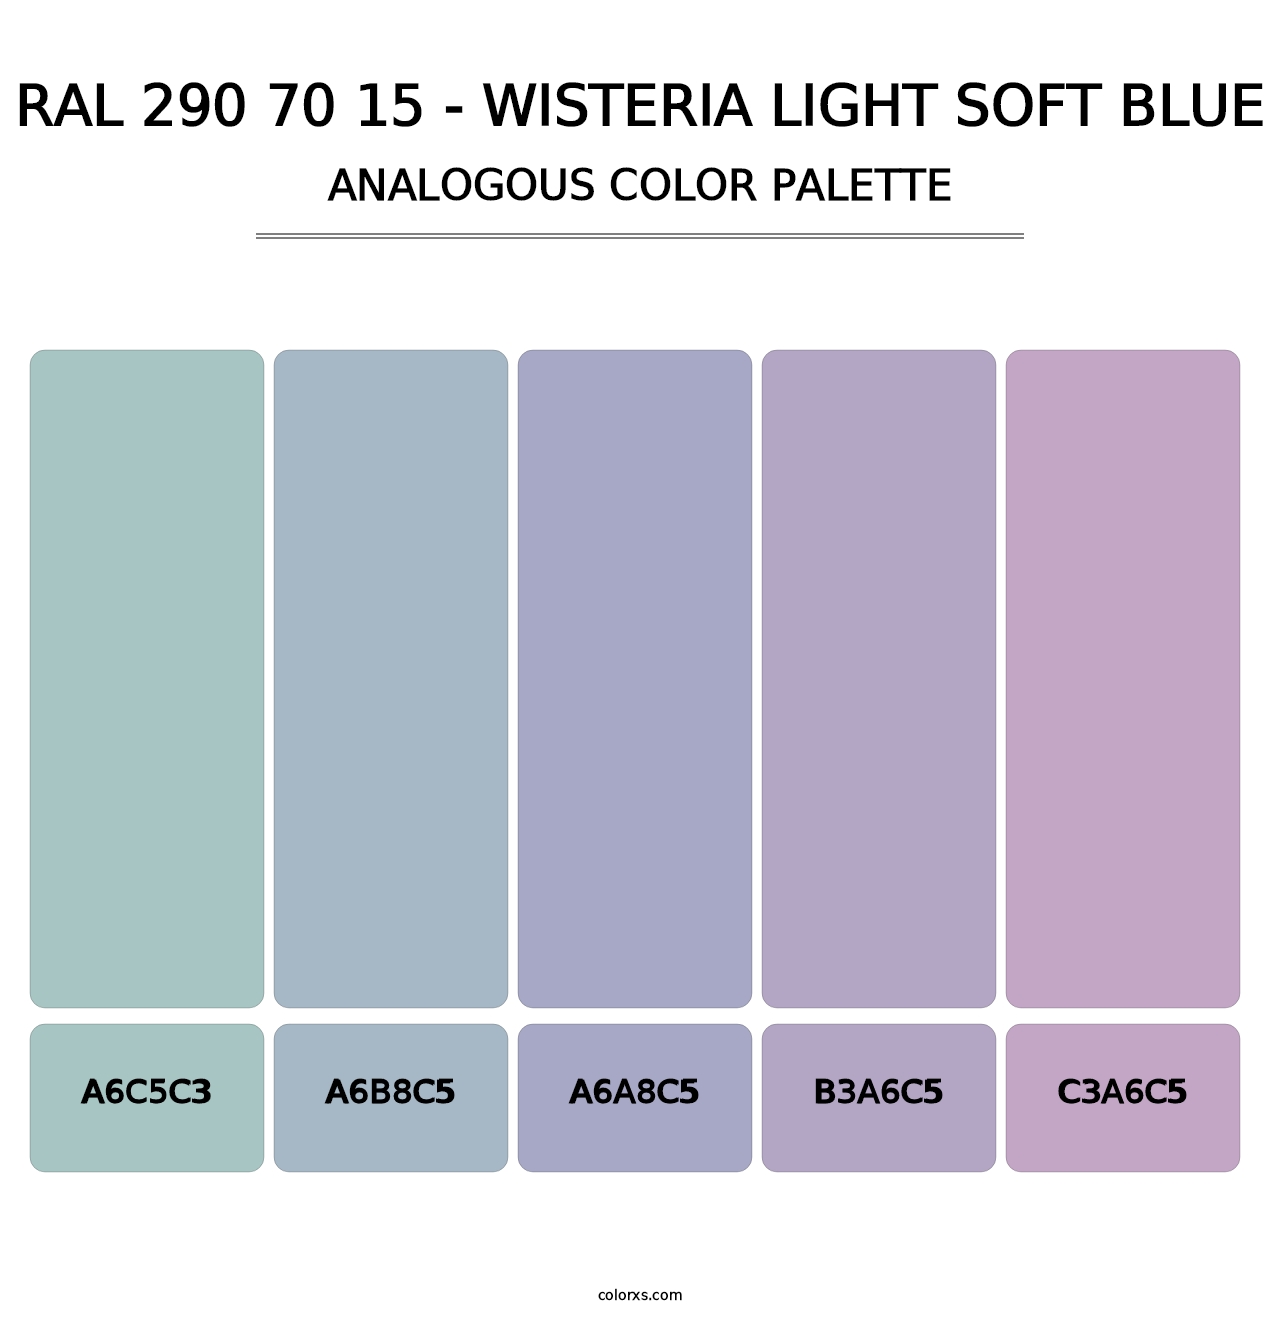 RAL 290 70 15 - Wisteria Light Soft Blue - Analogous Color Palette